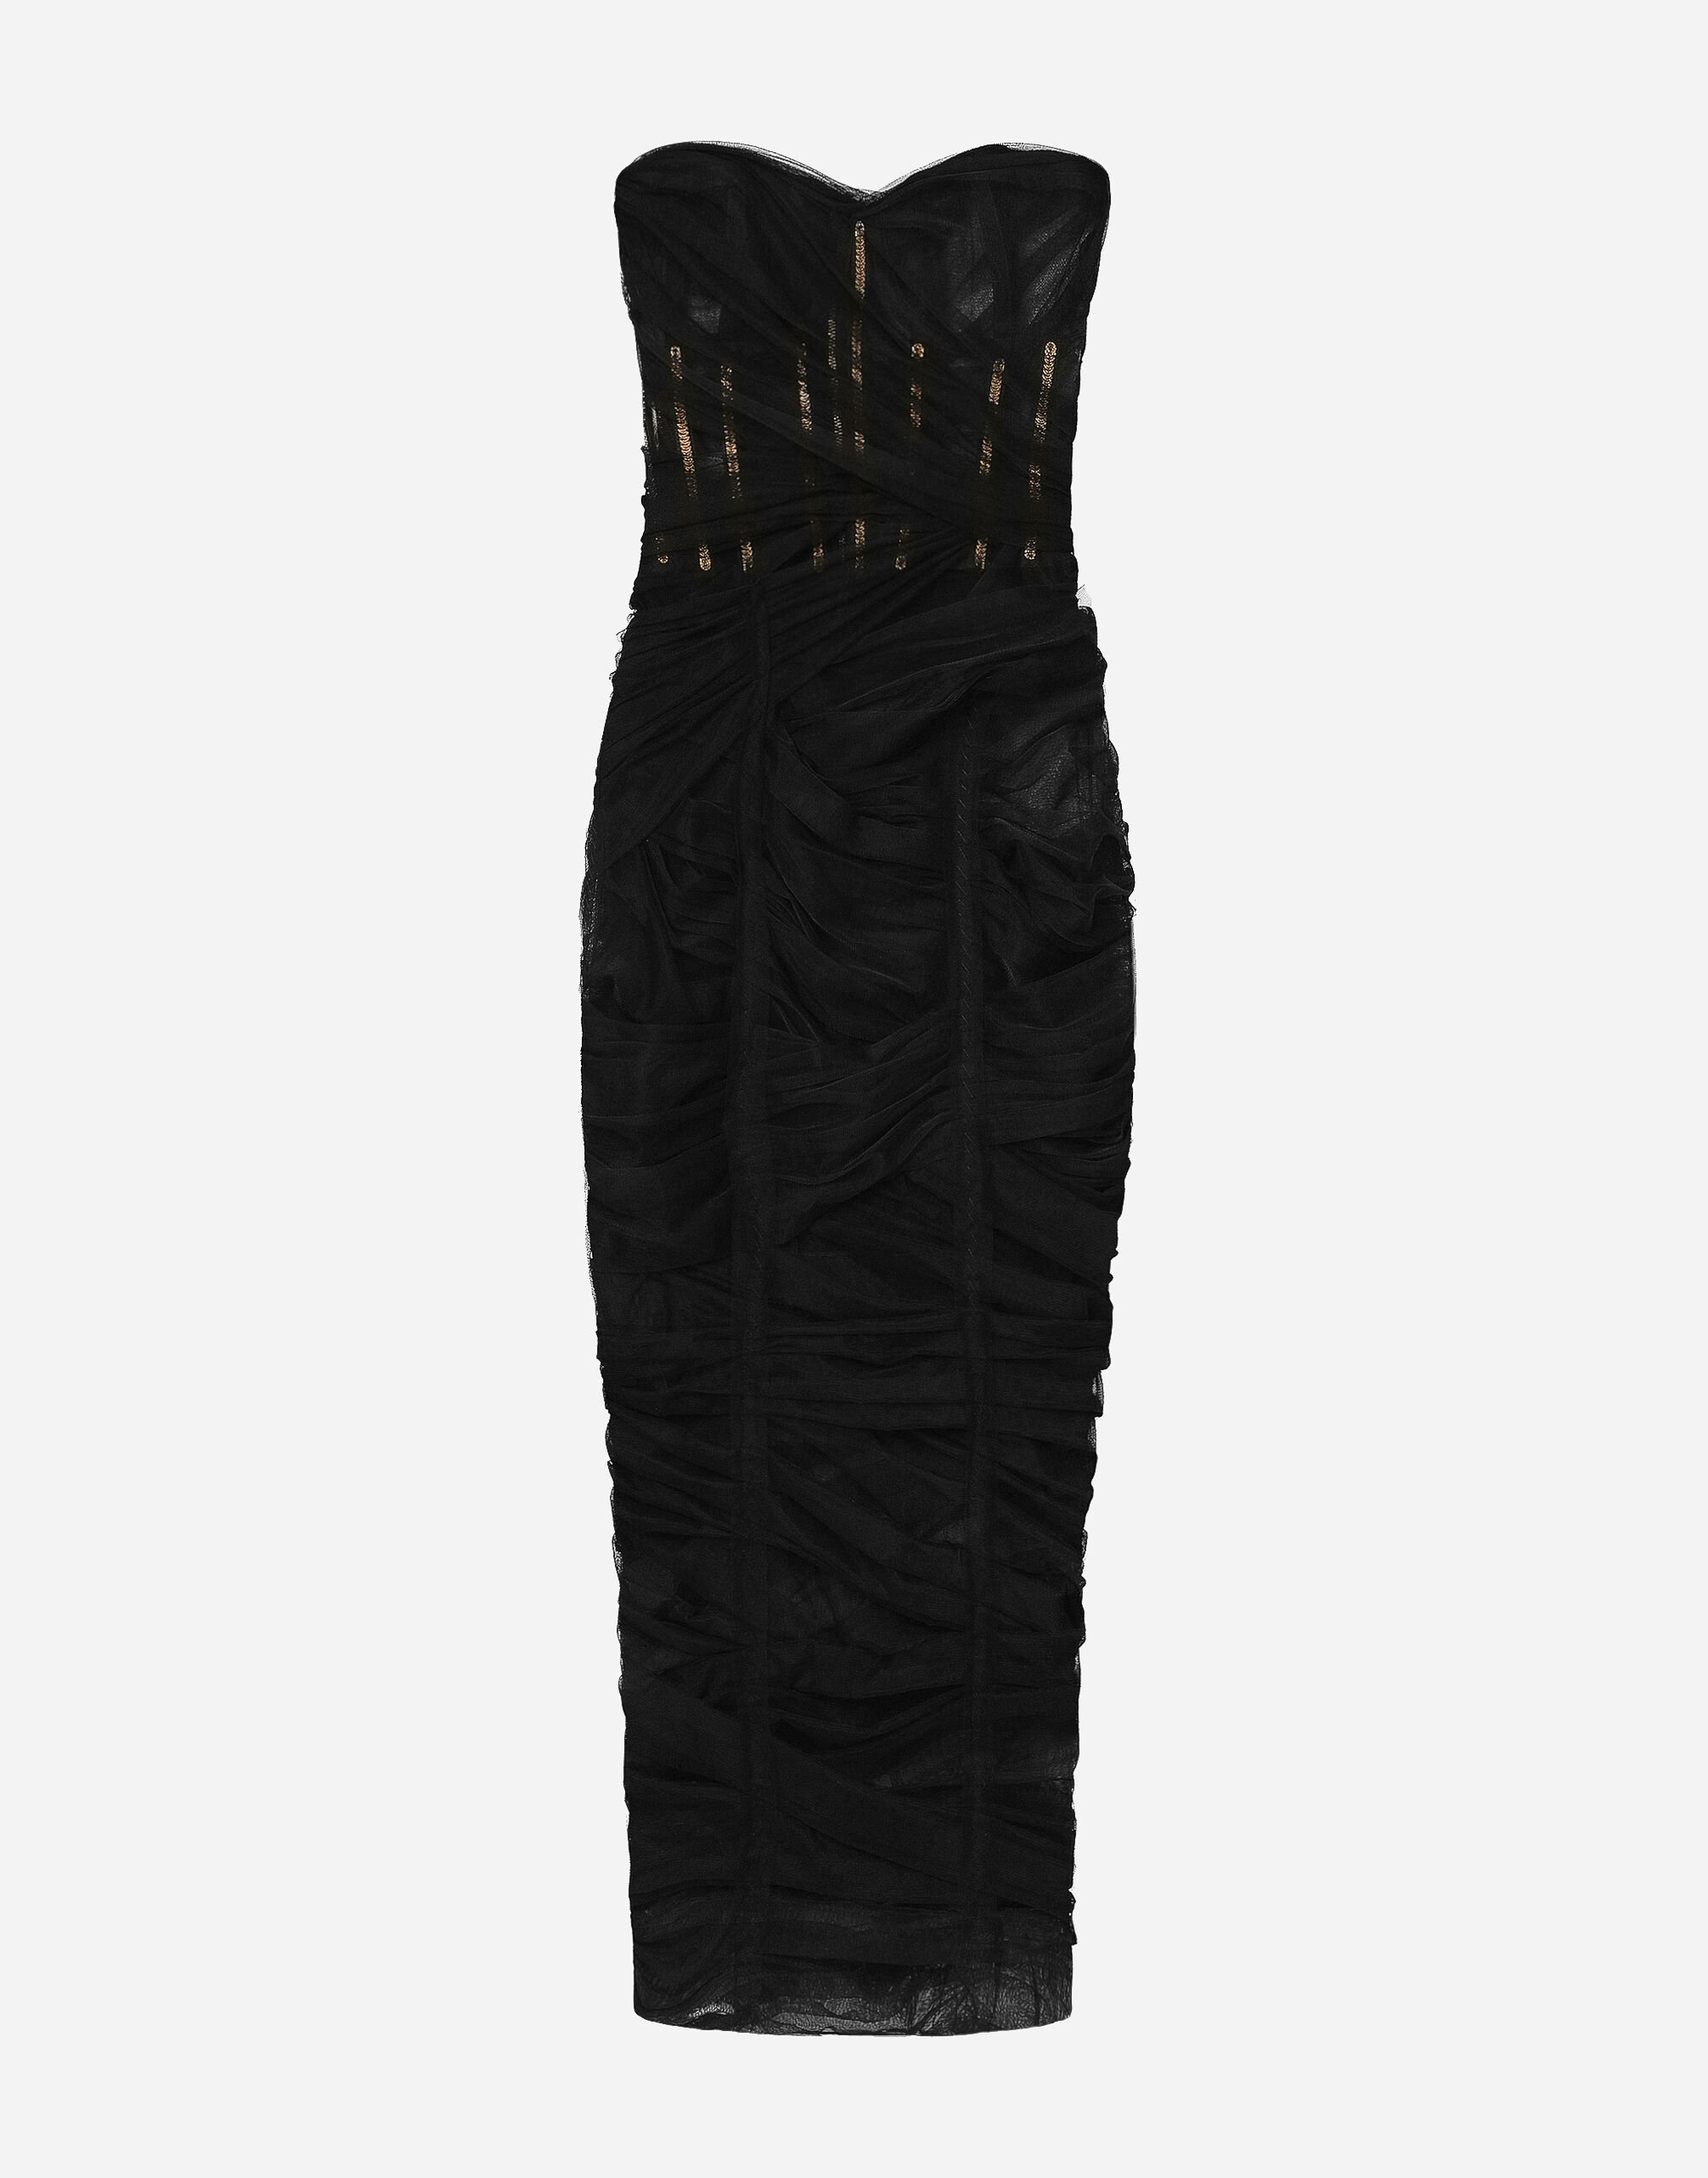 Dolce&Gabbana فستان كورسيه تول ملتف بطول للربلة متعدد الألوان BB5970AR441